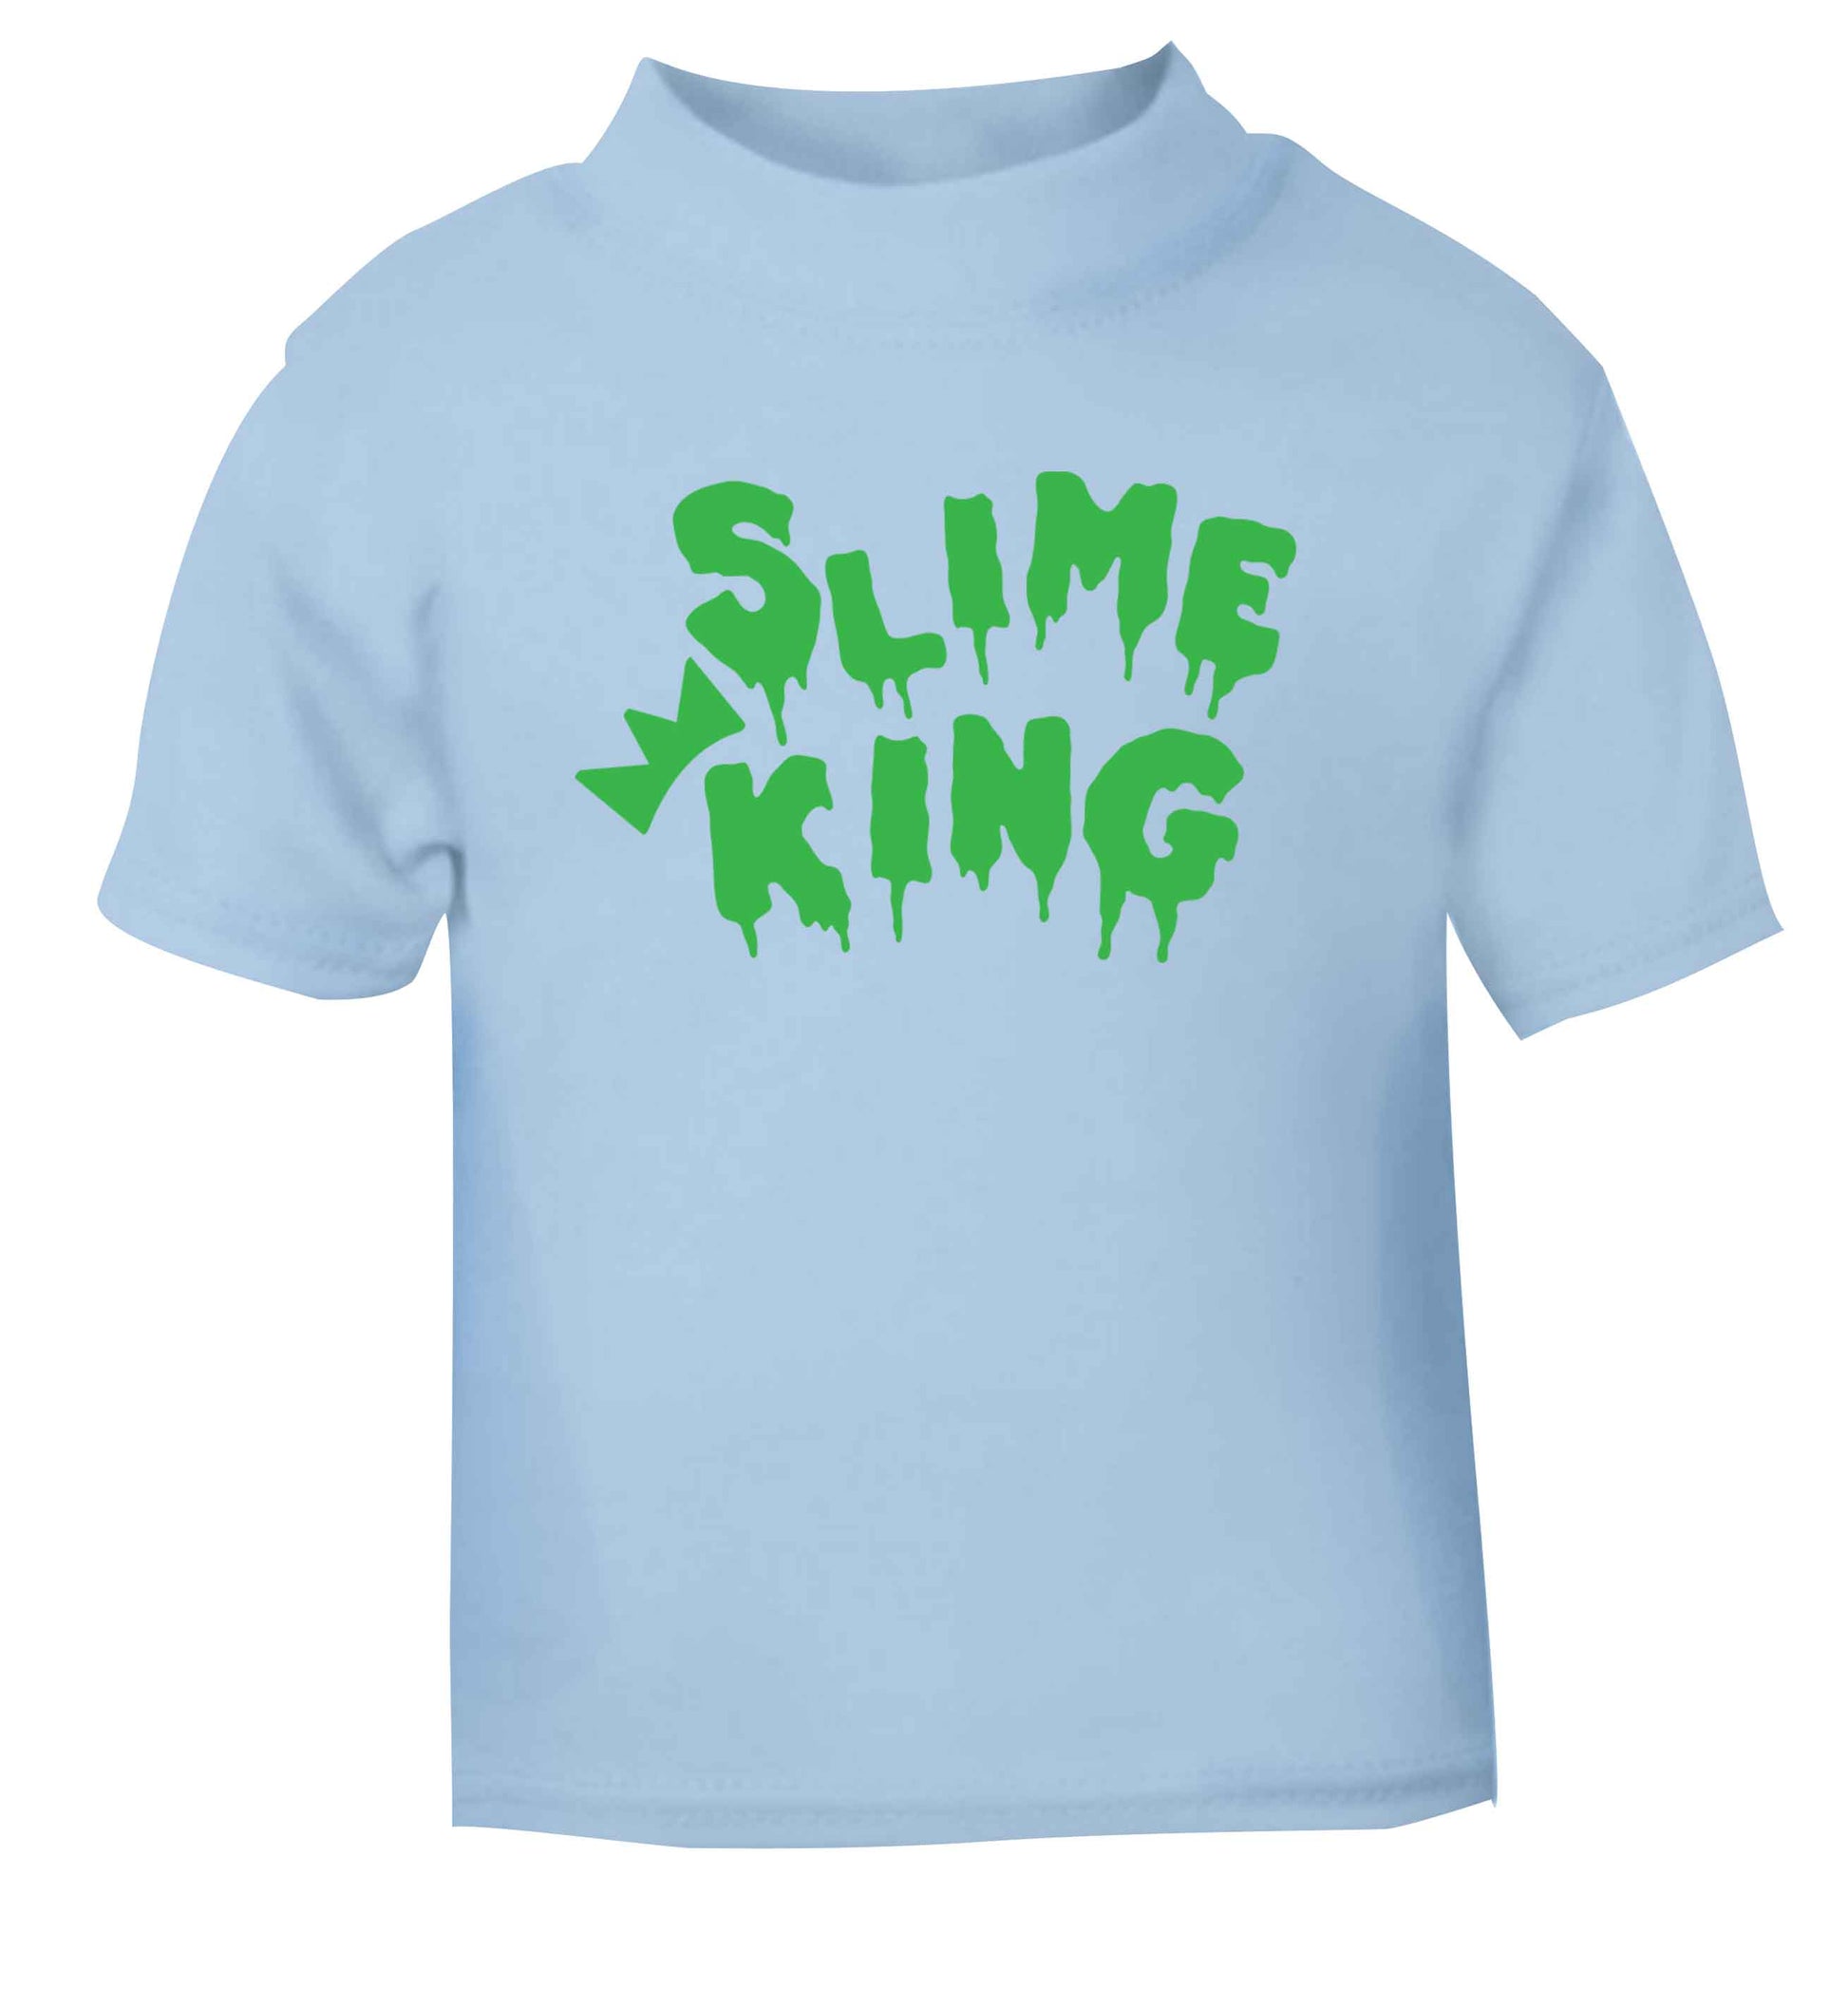 Neon green slime king light blue baby toddler Tshirt 2 Years